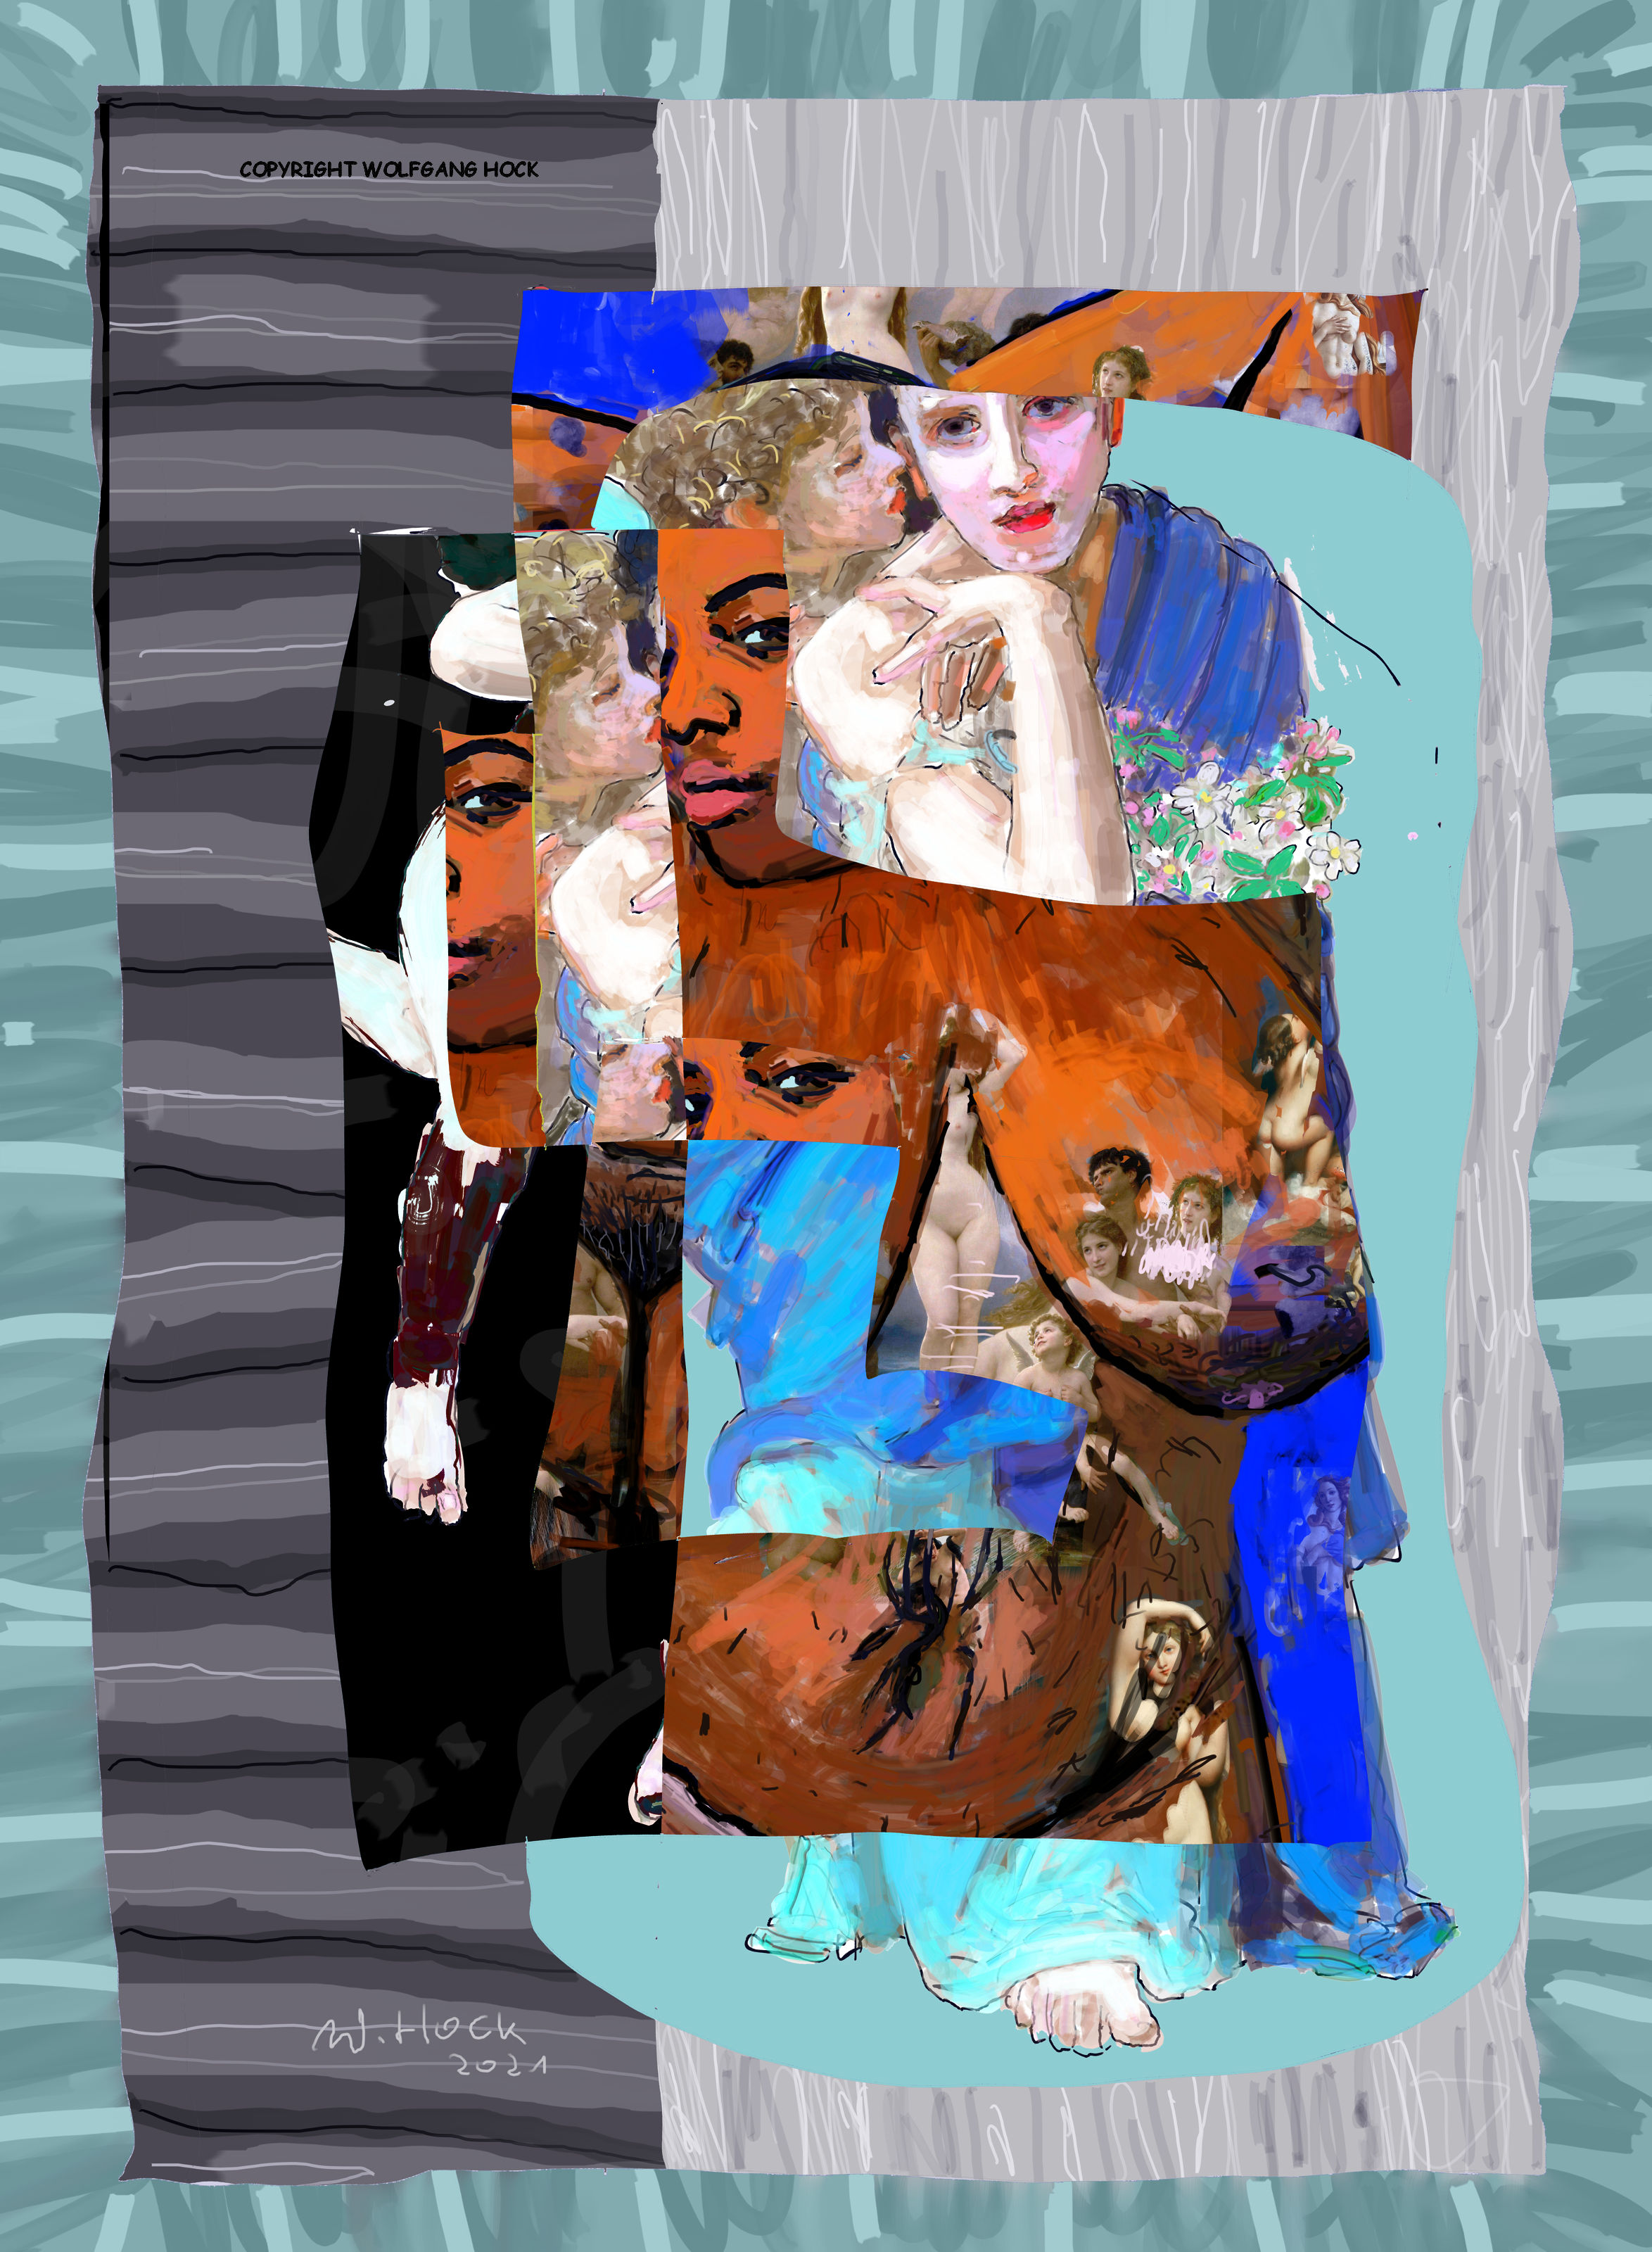 Jungfrau mit Venus und Collage II - Virgin with Venus and collage II - Virgem com Venus e  colagem II  2021   Handmade digital painting and collage on canvas 110 x 150 cm (190 megapixels)